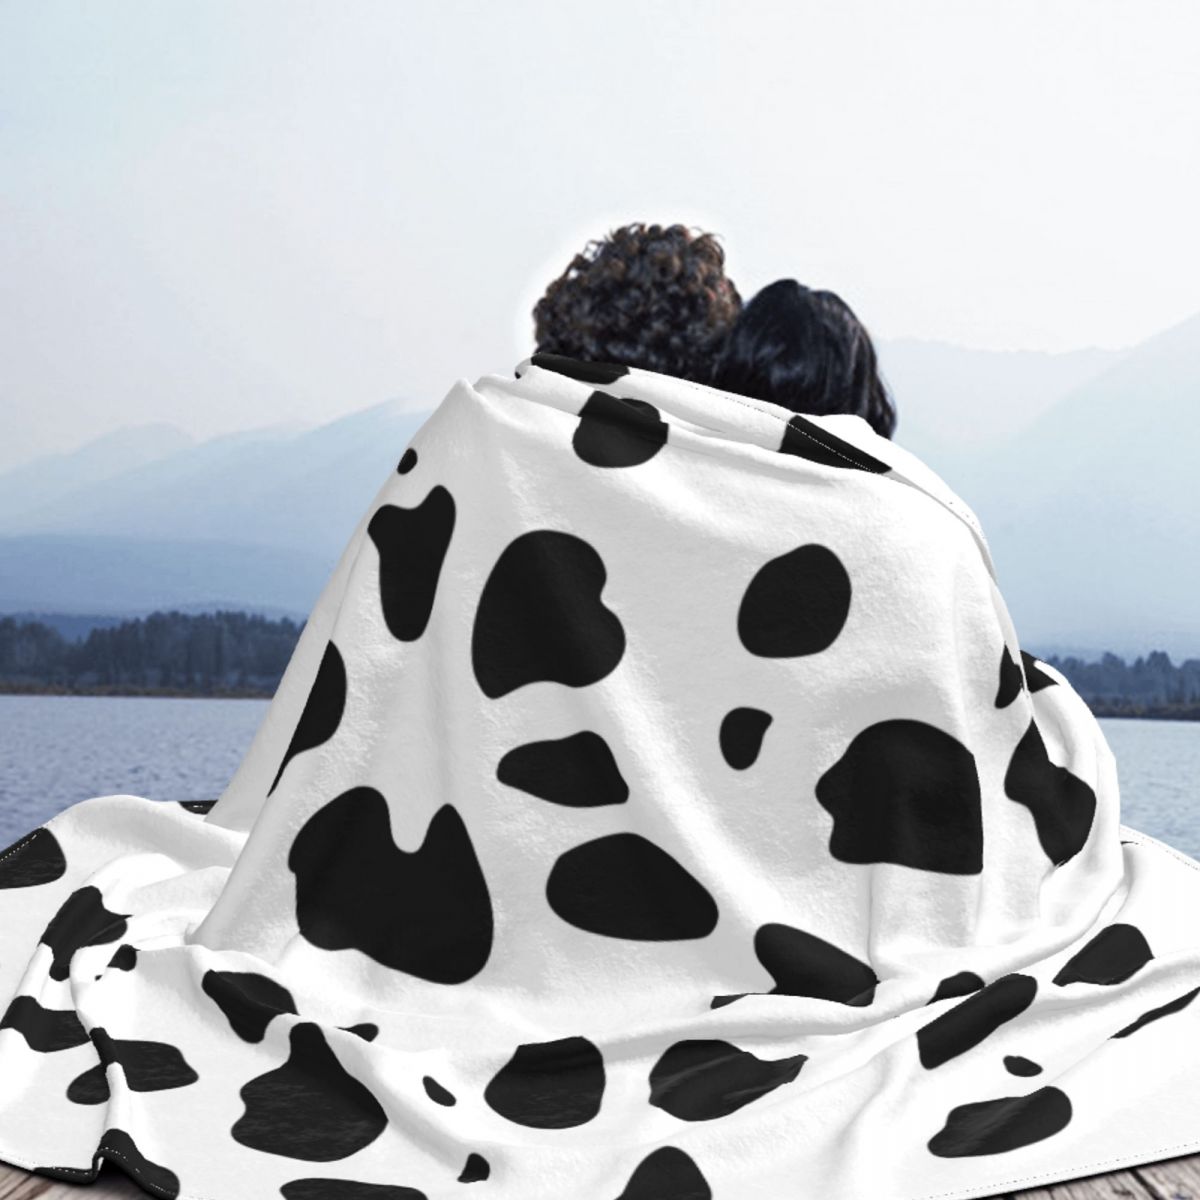 Dalmatian Spots Animal Texture Blanket